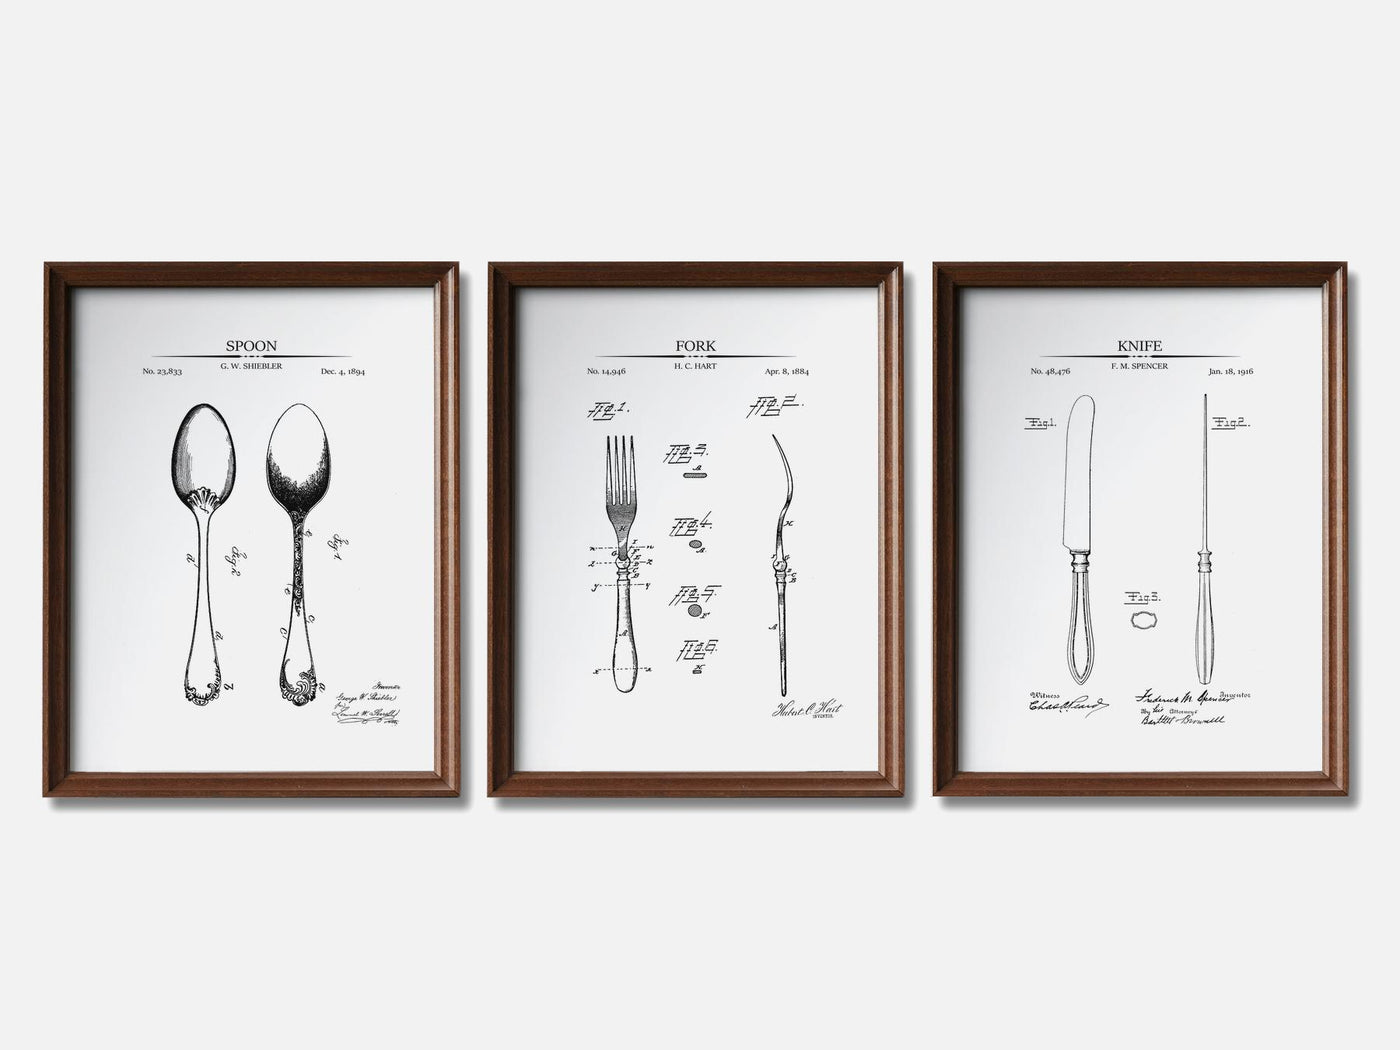 Dining Room Patent Print Set of 3 mockup - A_t10021-V1-PC_F+WA-SS_3-PS_11x14-C_whi variant